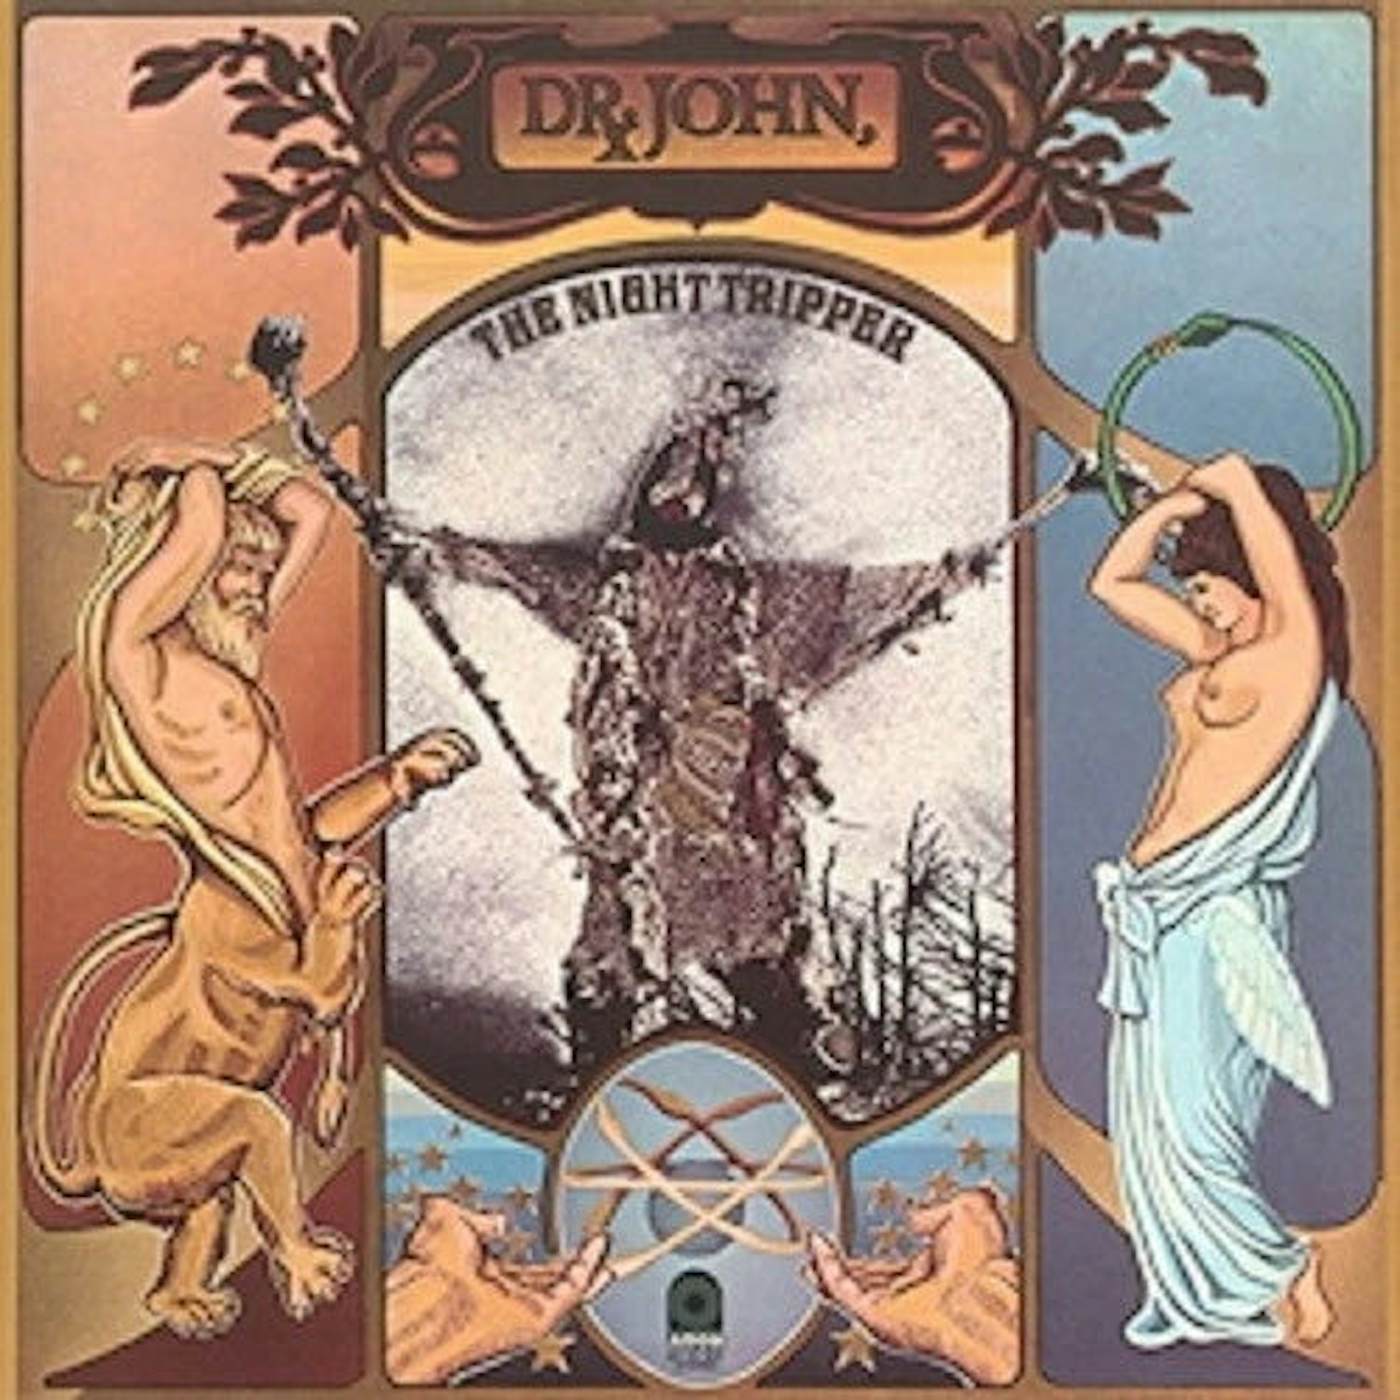 Dr. John, The Night Tripper - The Sun, Moon & Herbs